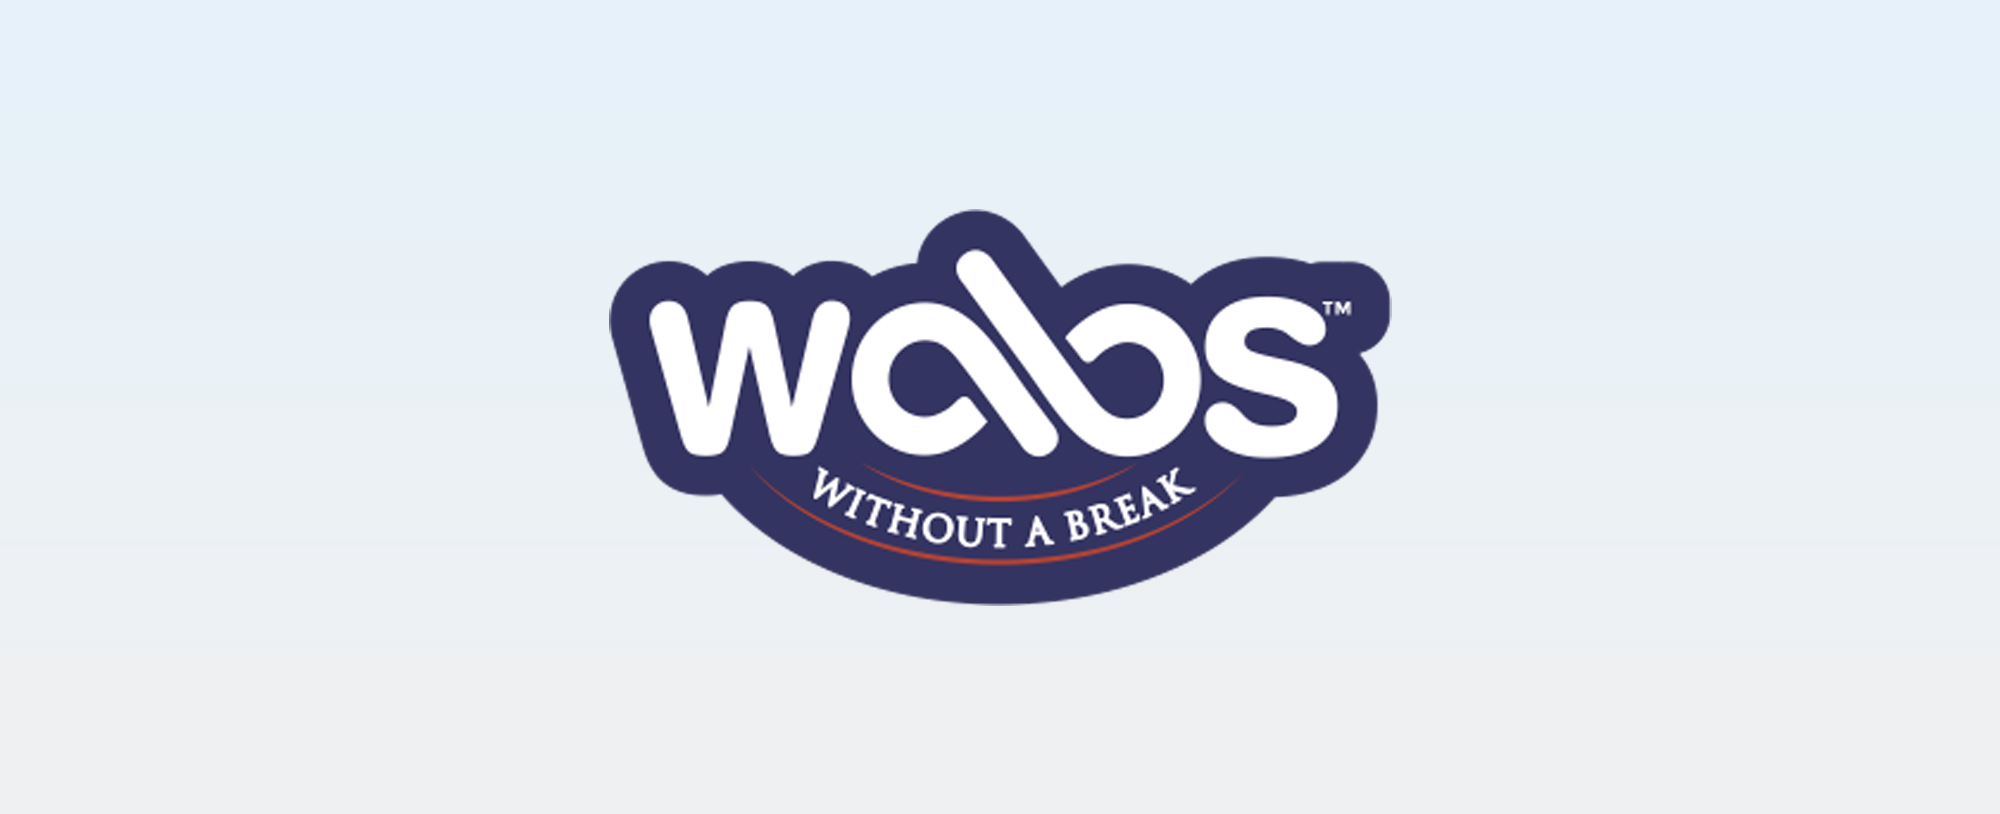 wabs-logo